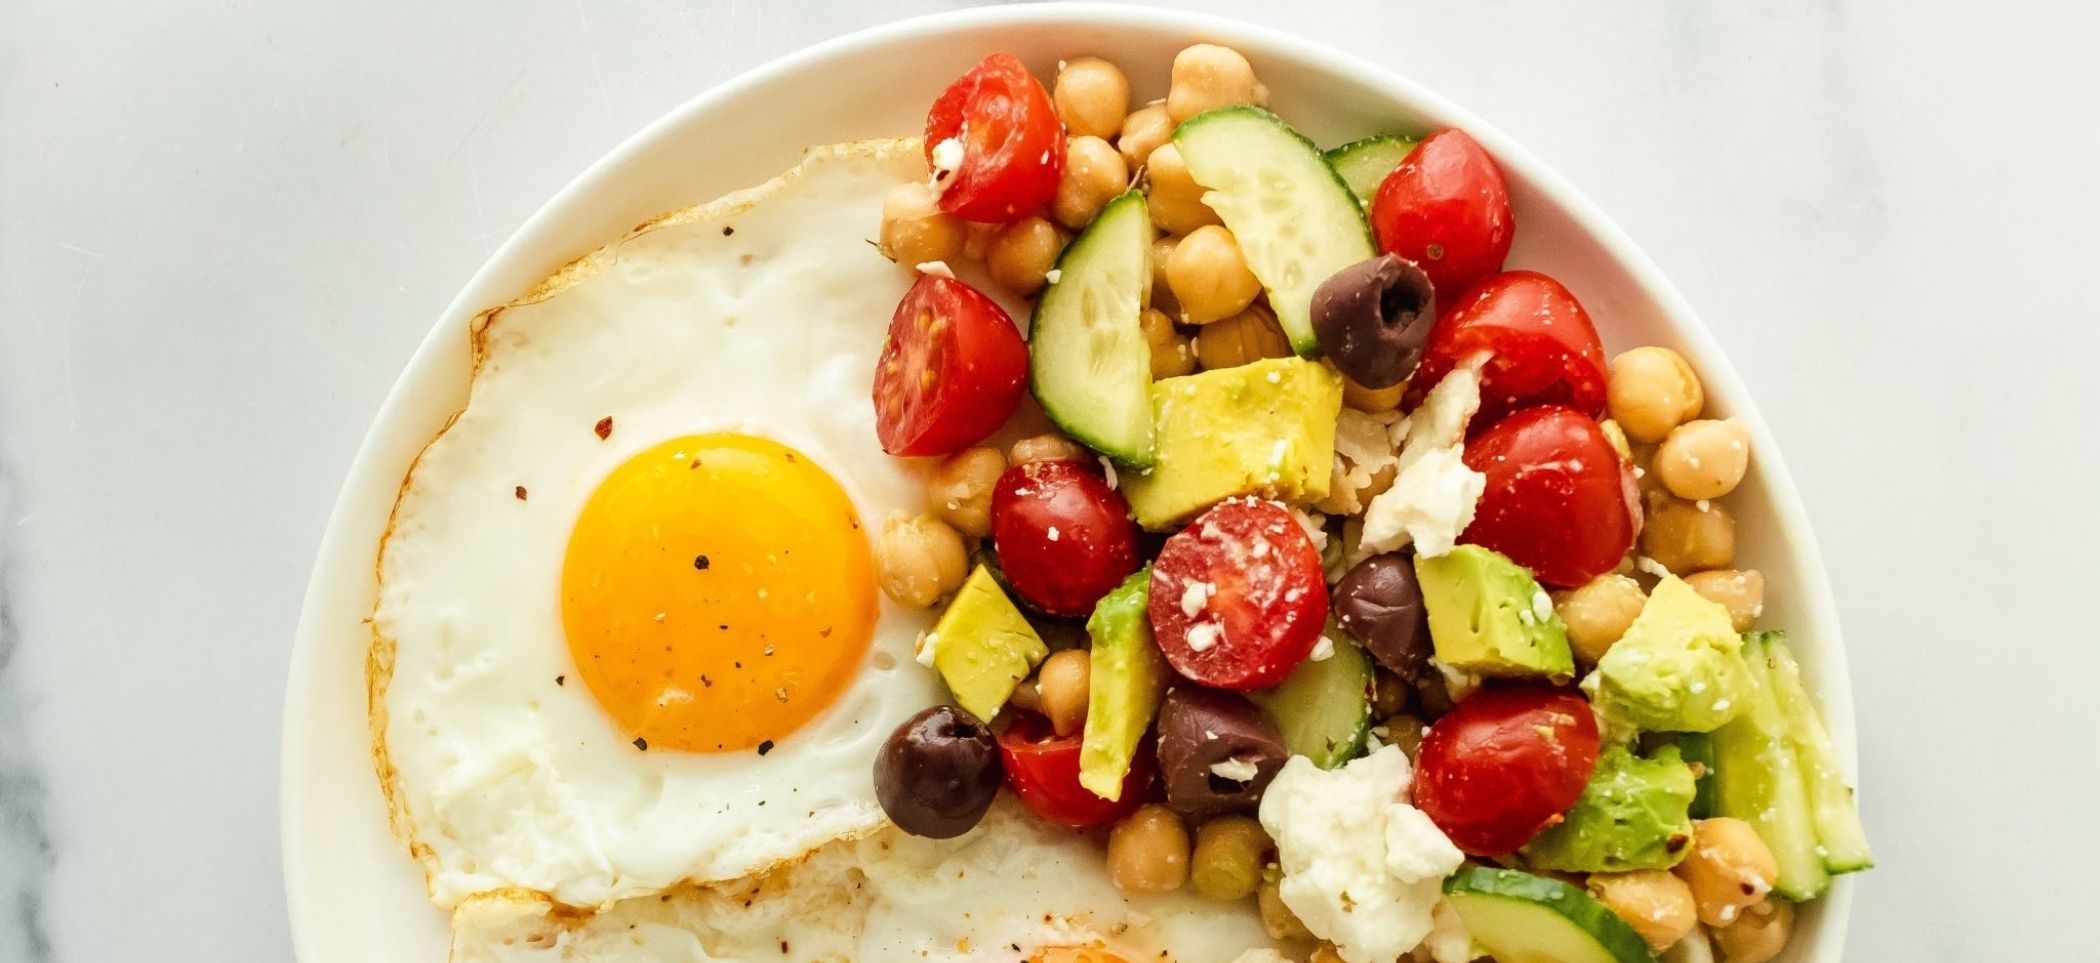 Sunny Mediterranean Breakfast Plate